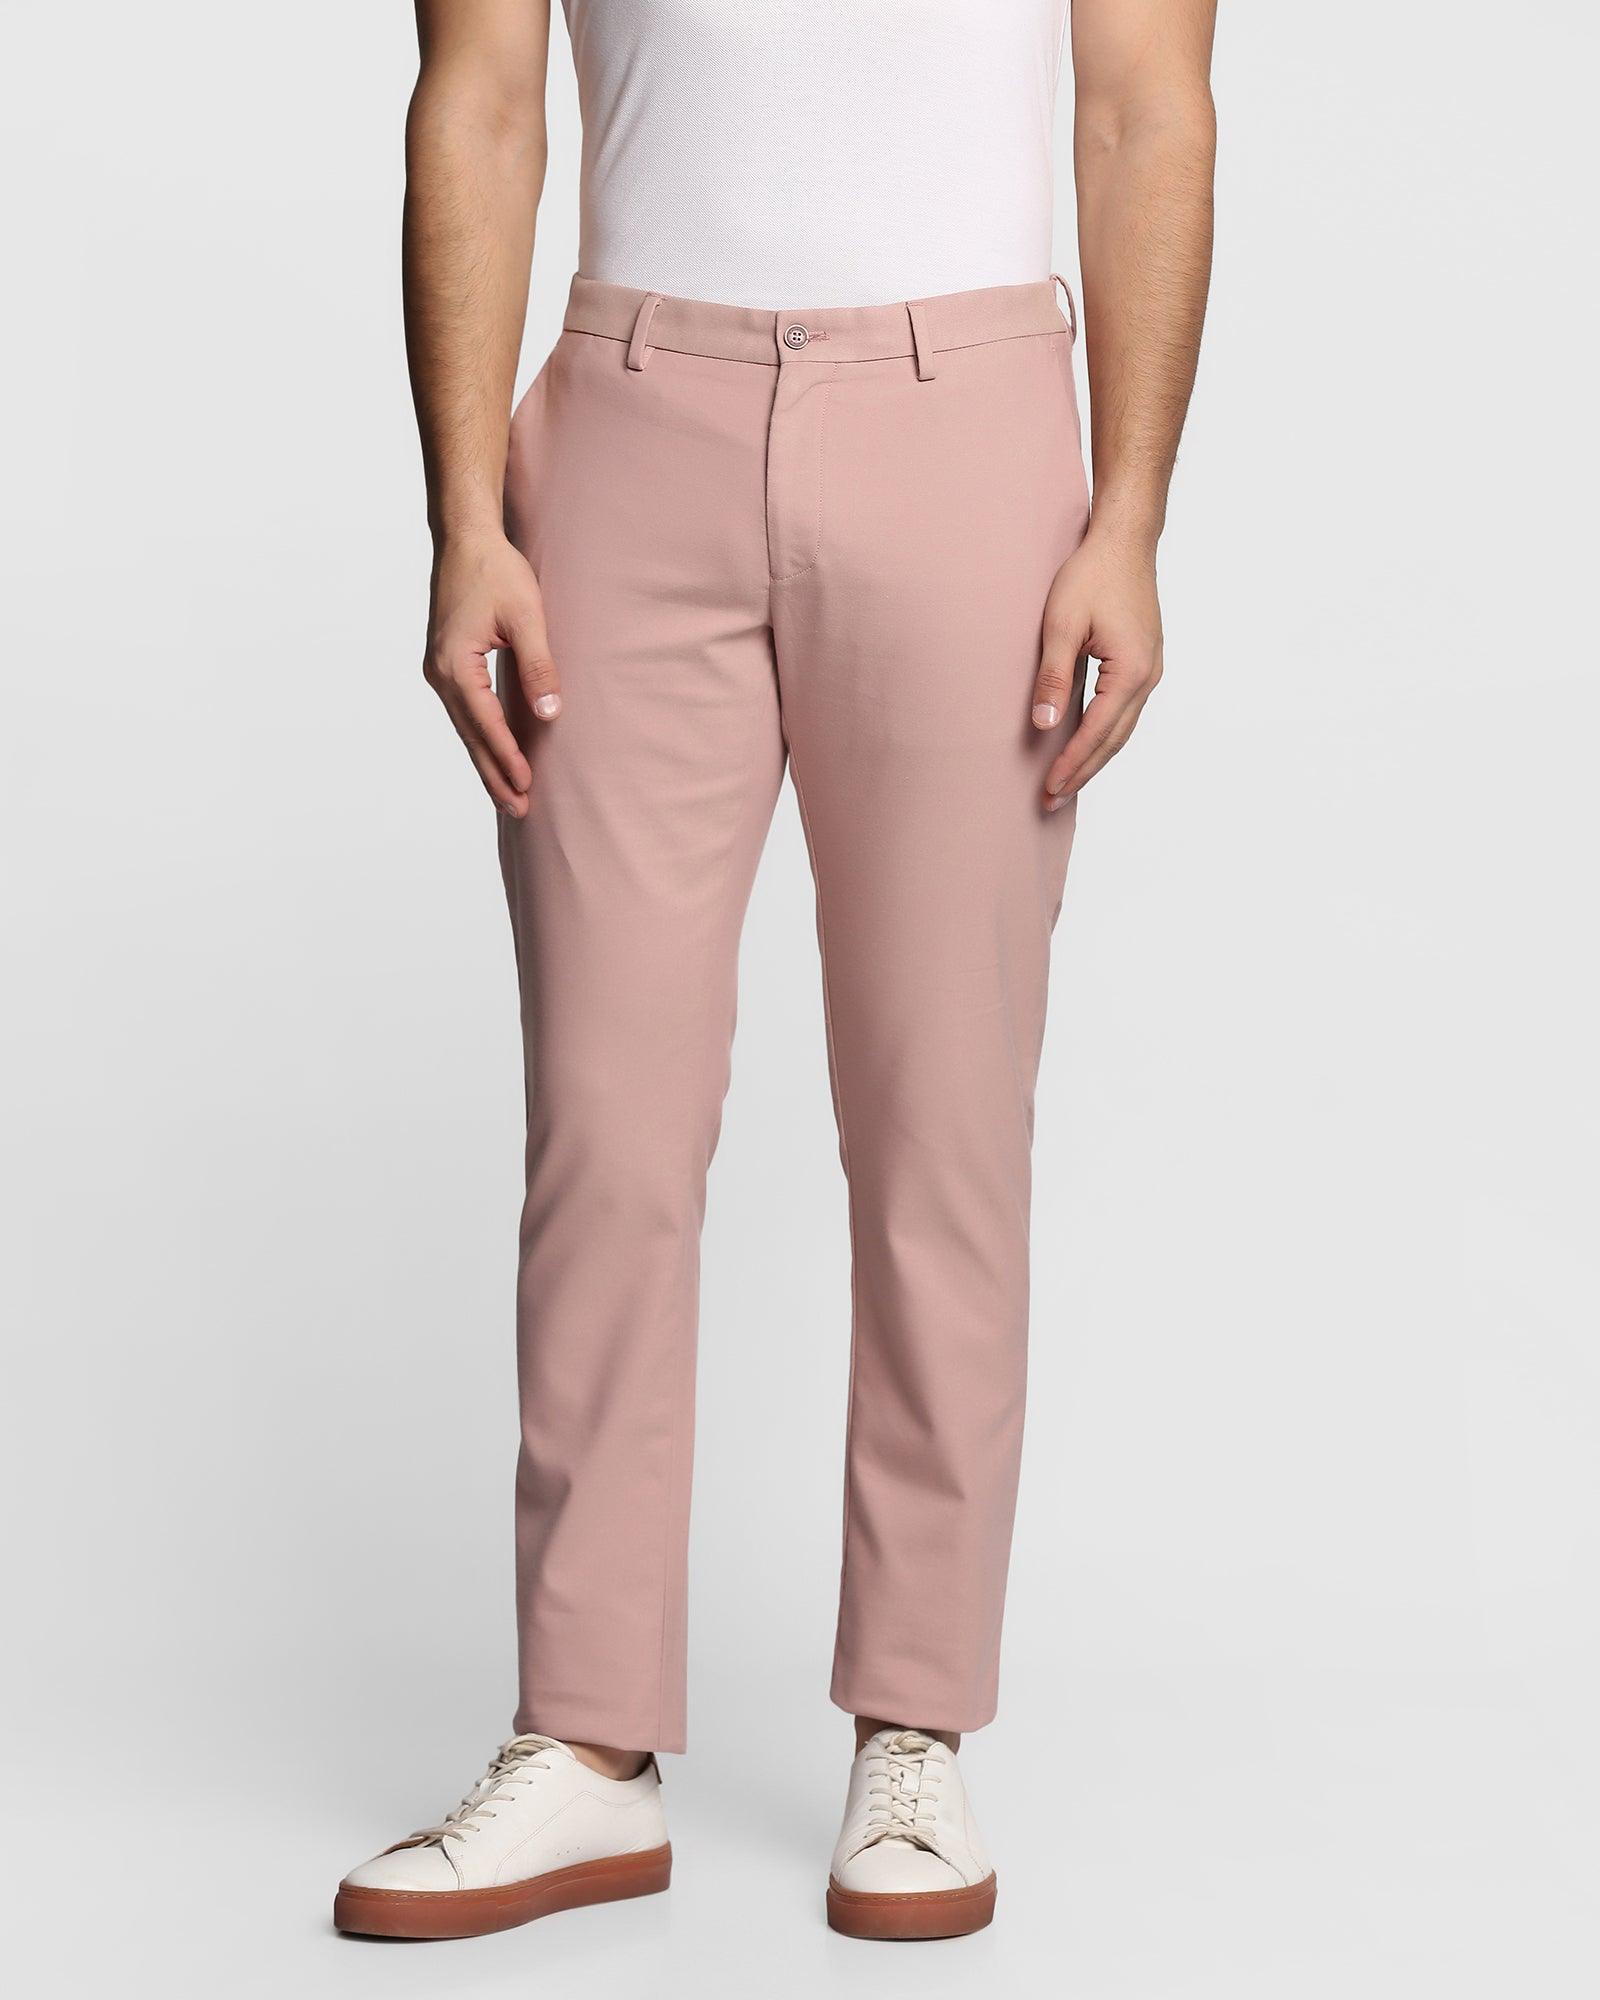 Slim Comfort B-95 Casual Light Pink Textured Khakis - Lotus